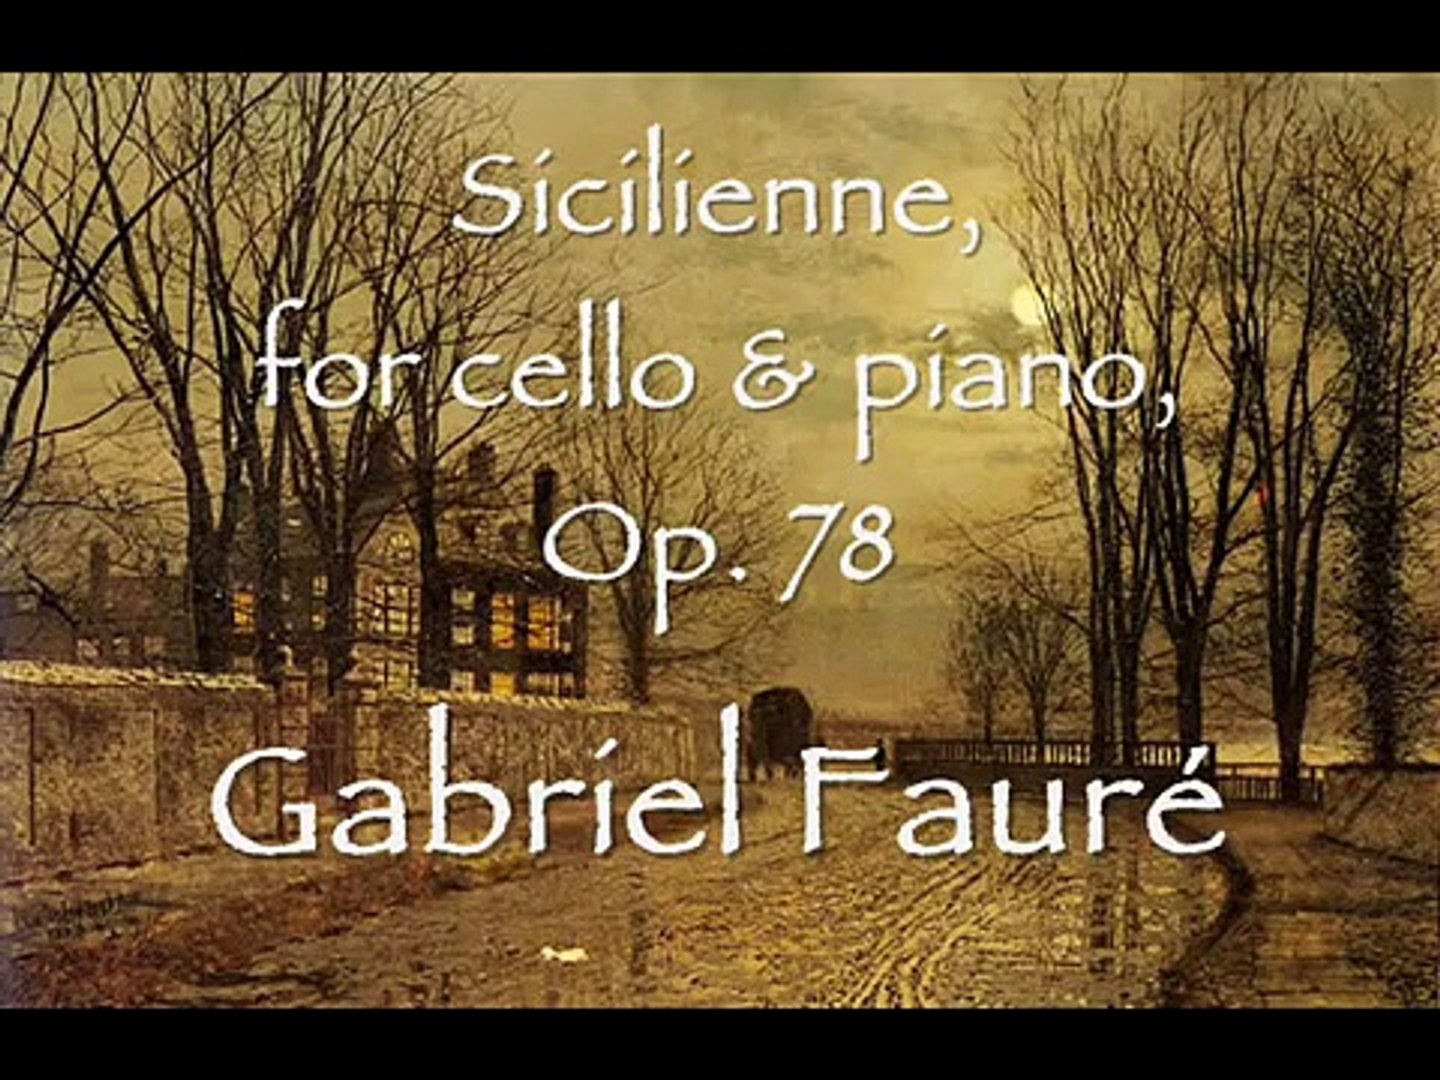 Gabriel Fauré - Sicilienne, for cello & piano, Op. 78 - video Dailymotion